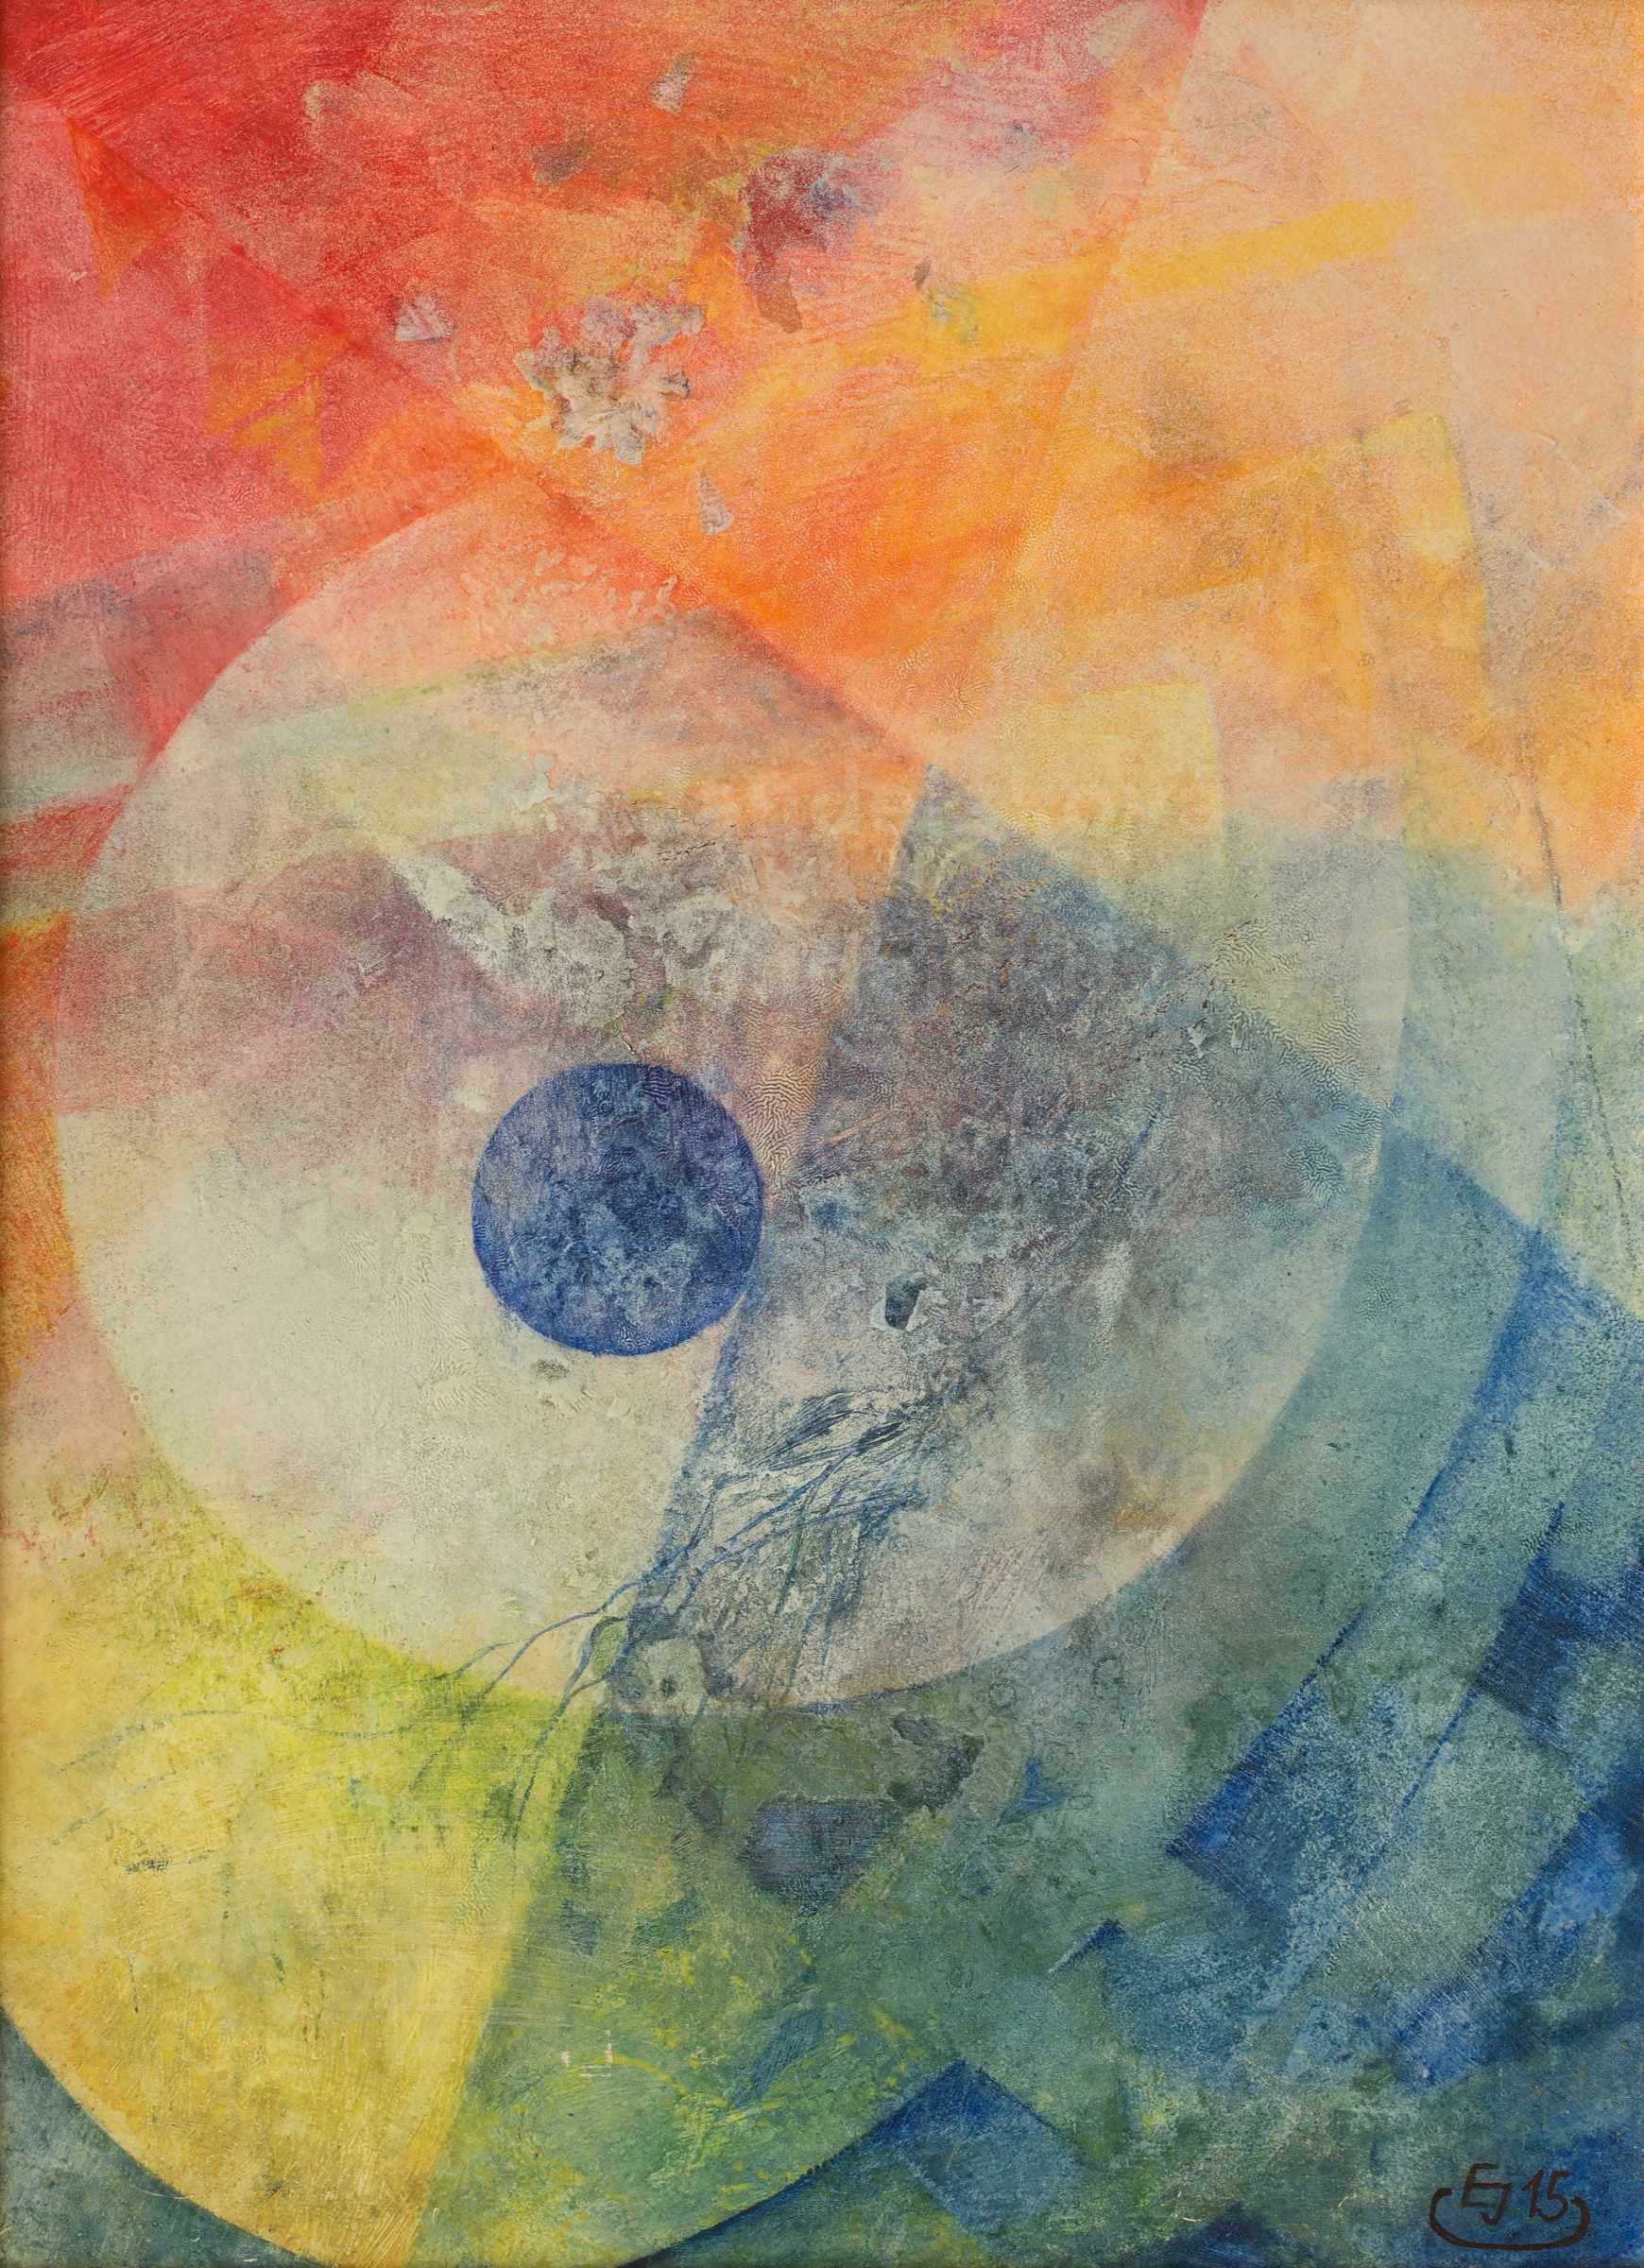 Energie modré planety - Galerie Eva Jandejsková